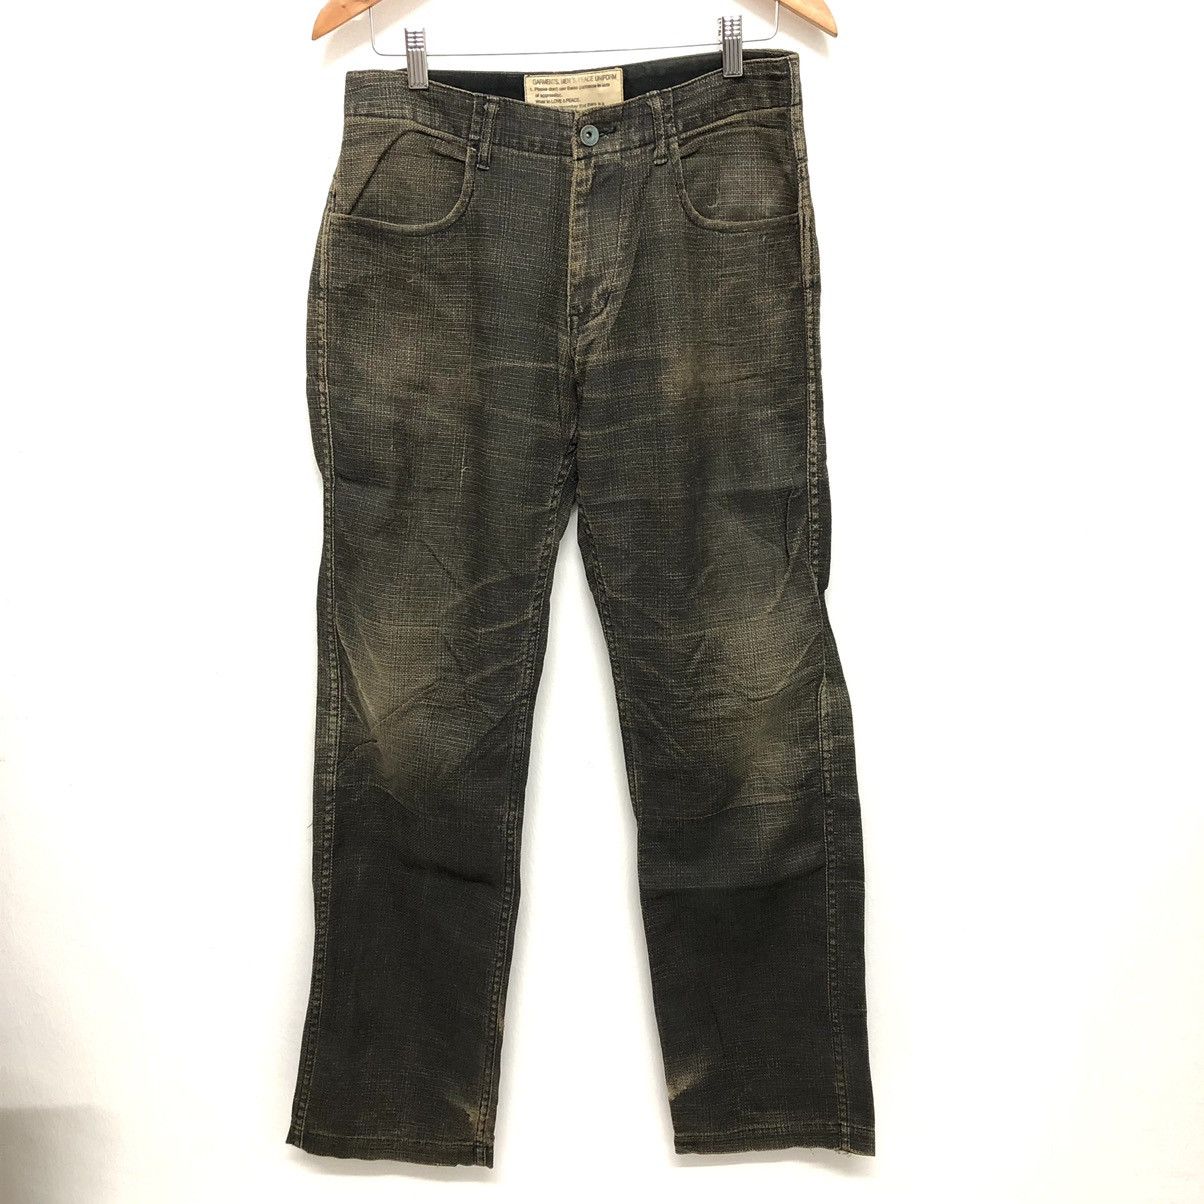 Vintage Vintage 63’ John Bull unknown Soldier Pants Size US 30 / EU 46 - 1 Preview